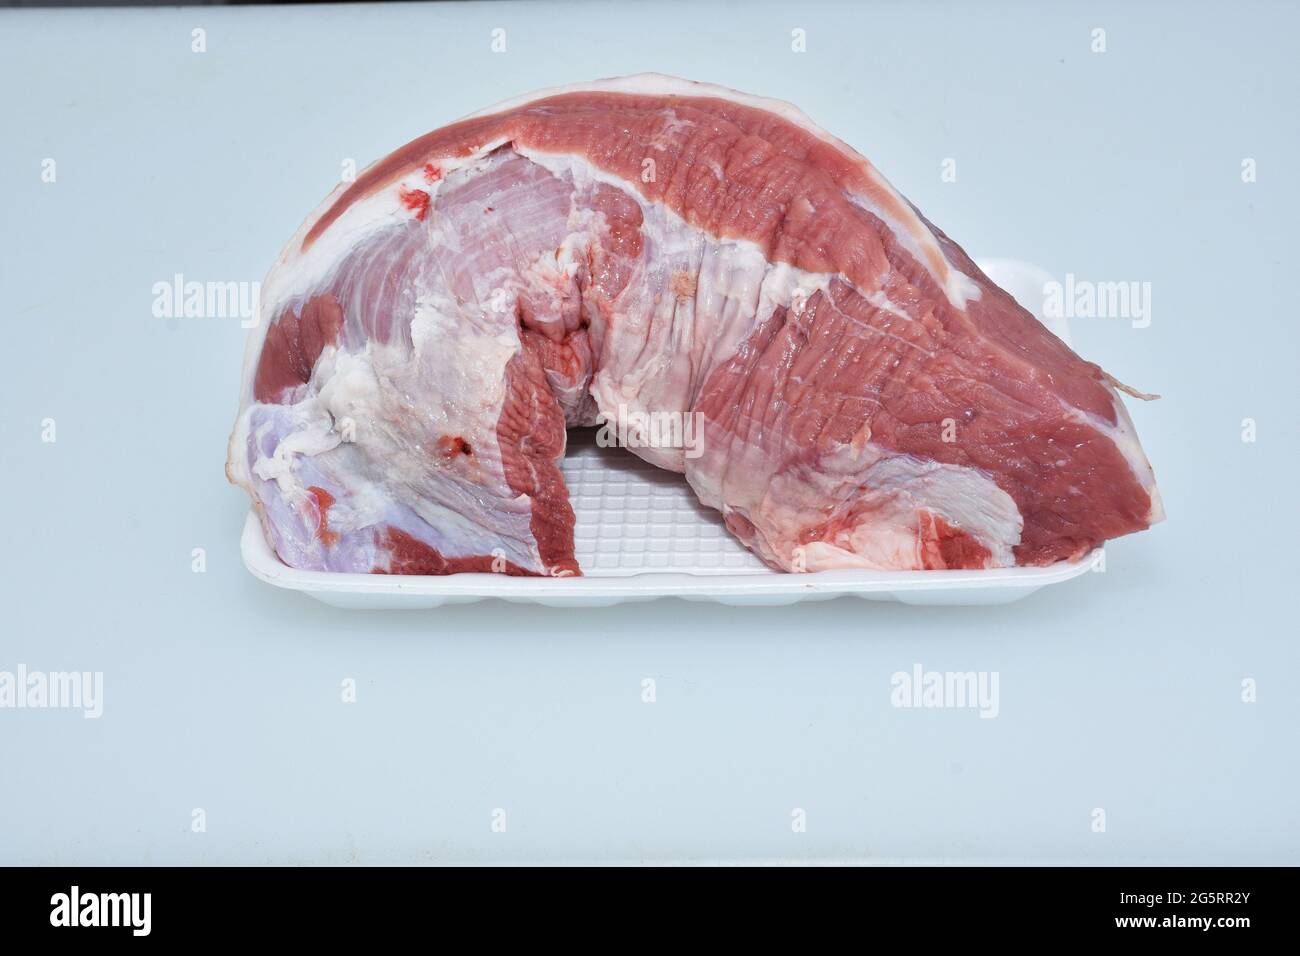 carne de lomo de cordero en plato de fondo blanco primer plano, carnero crudo, carnicero cortado Foto de stock